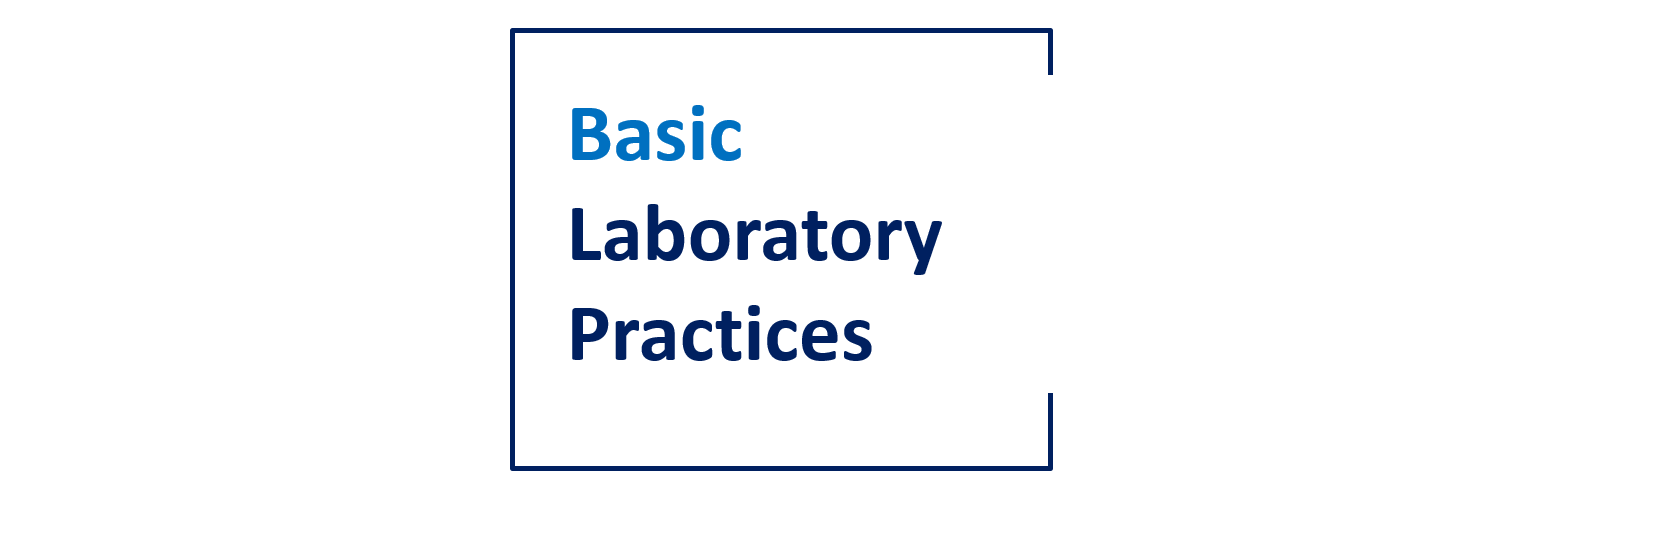 Basic Laboratory Practices 